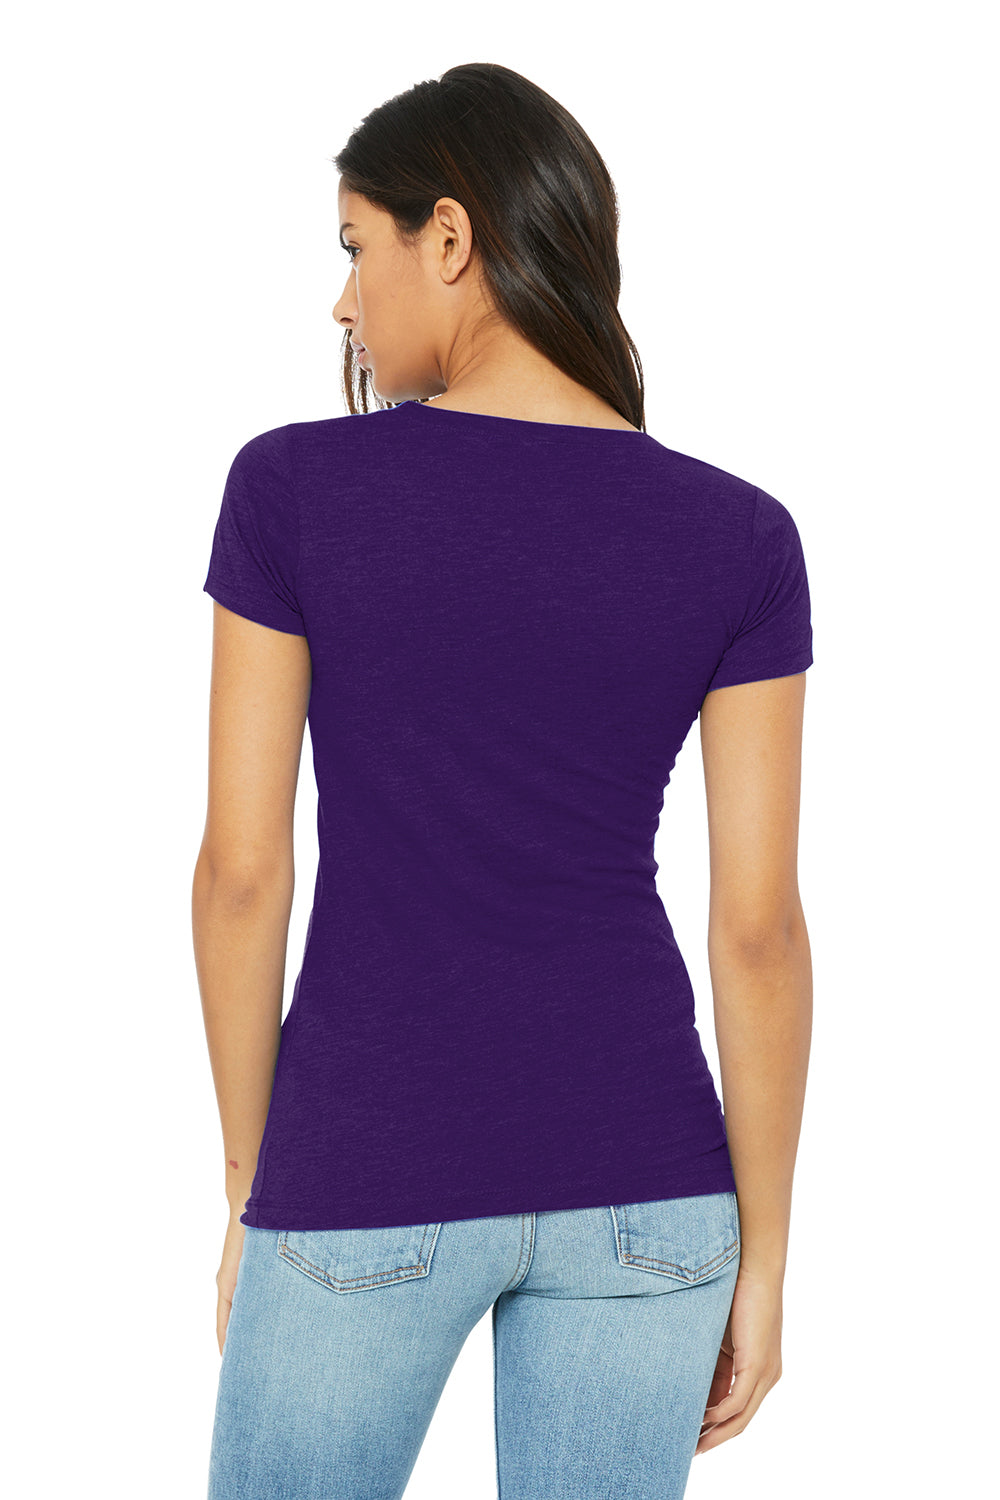 Bella + Canvas BC6004/6004 Womens The Favorite Short Sleeve Crewneck T-Shirt Team Purple Model Back